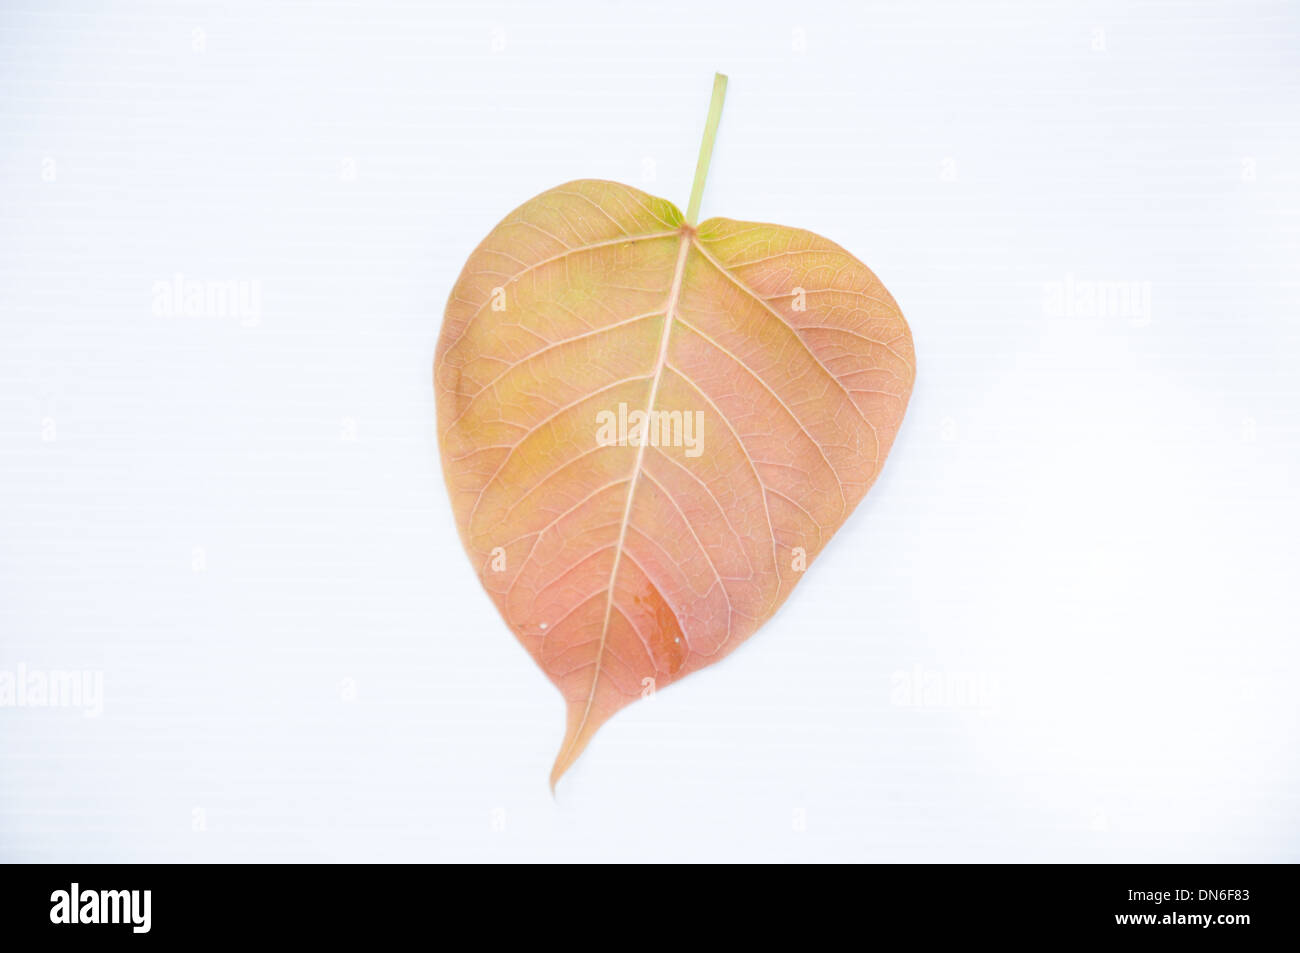 Bodh tree leaf on white background Stock Photo